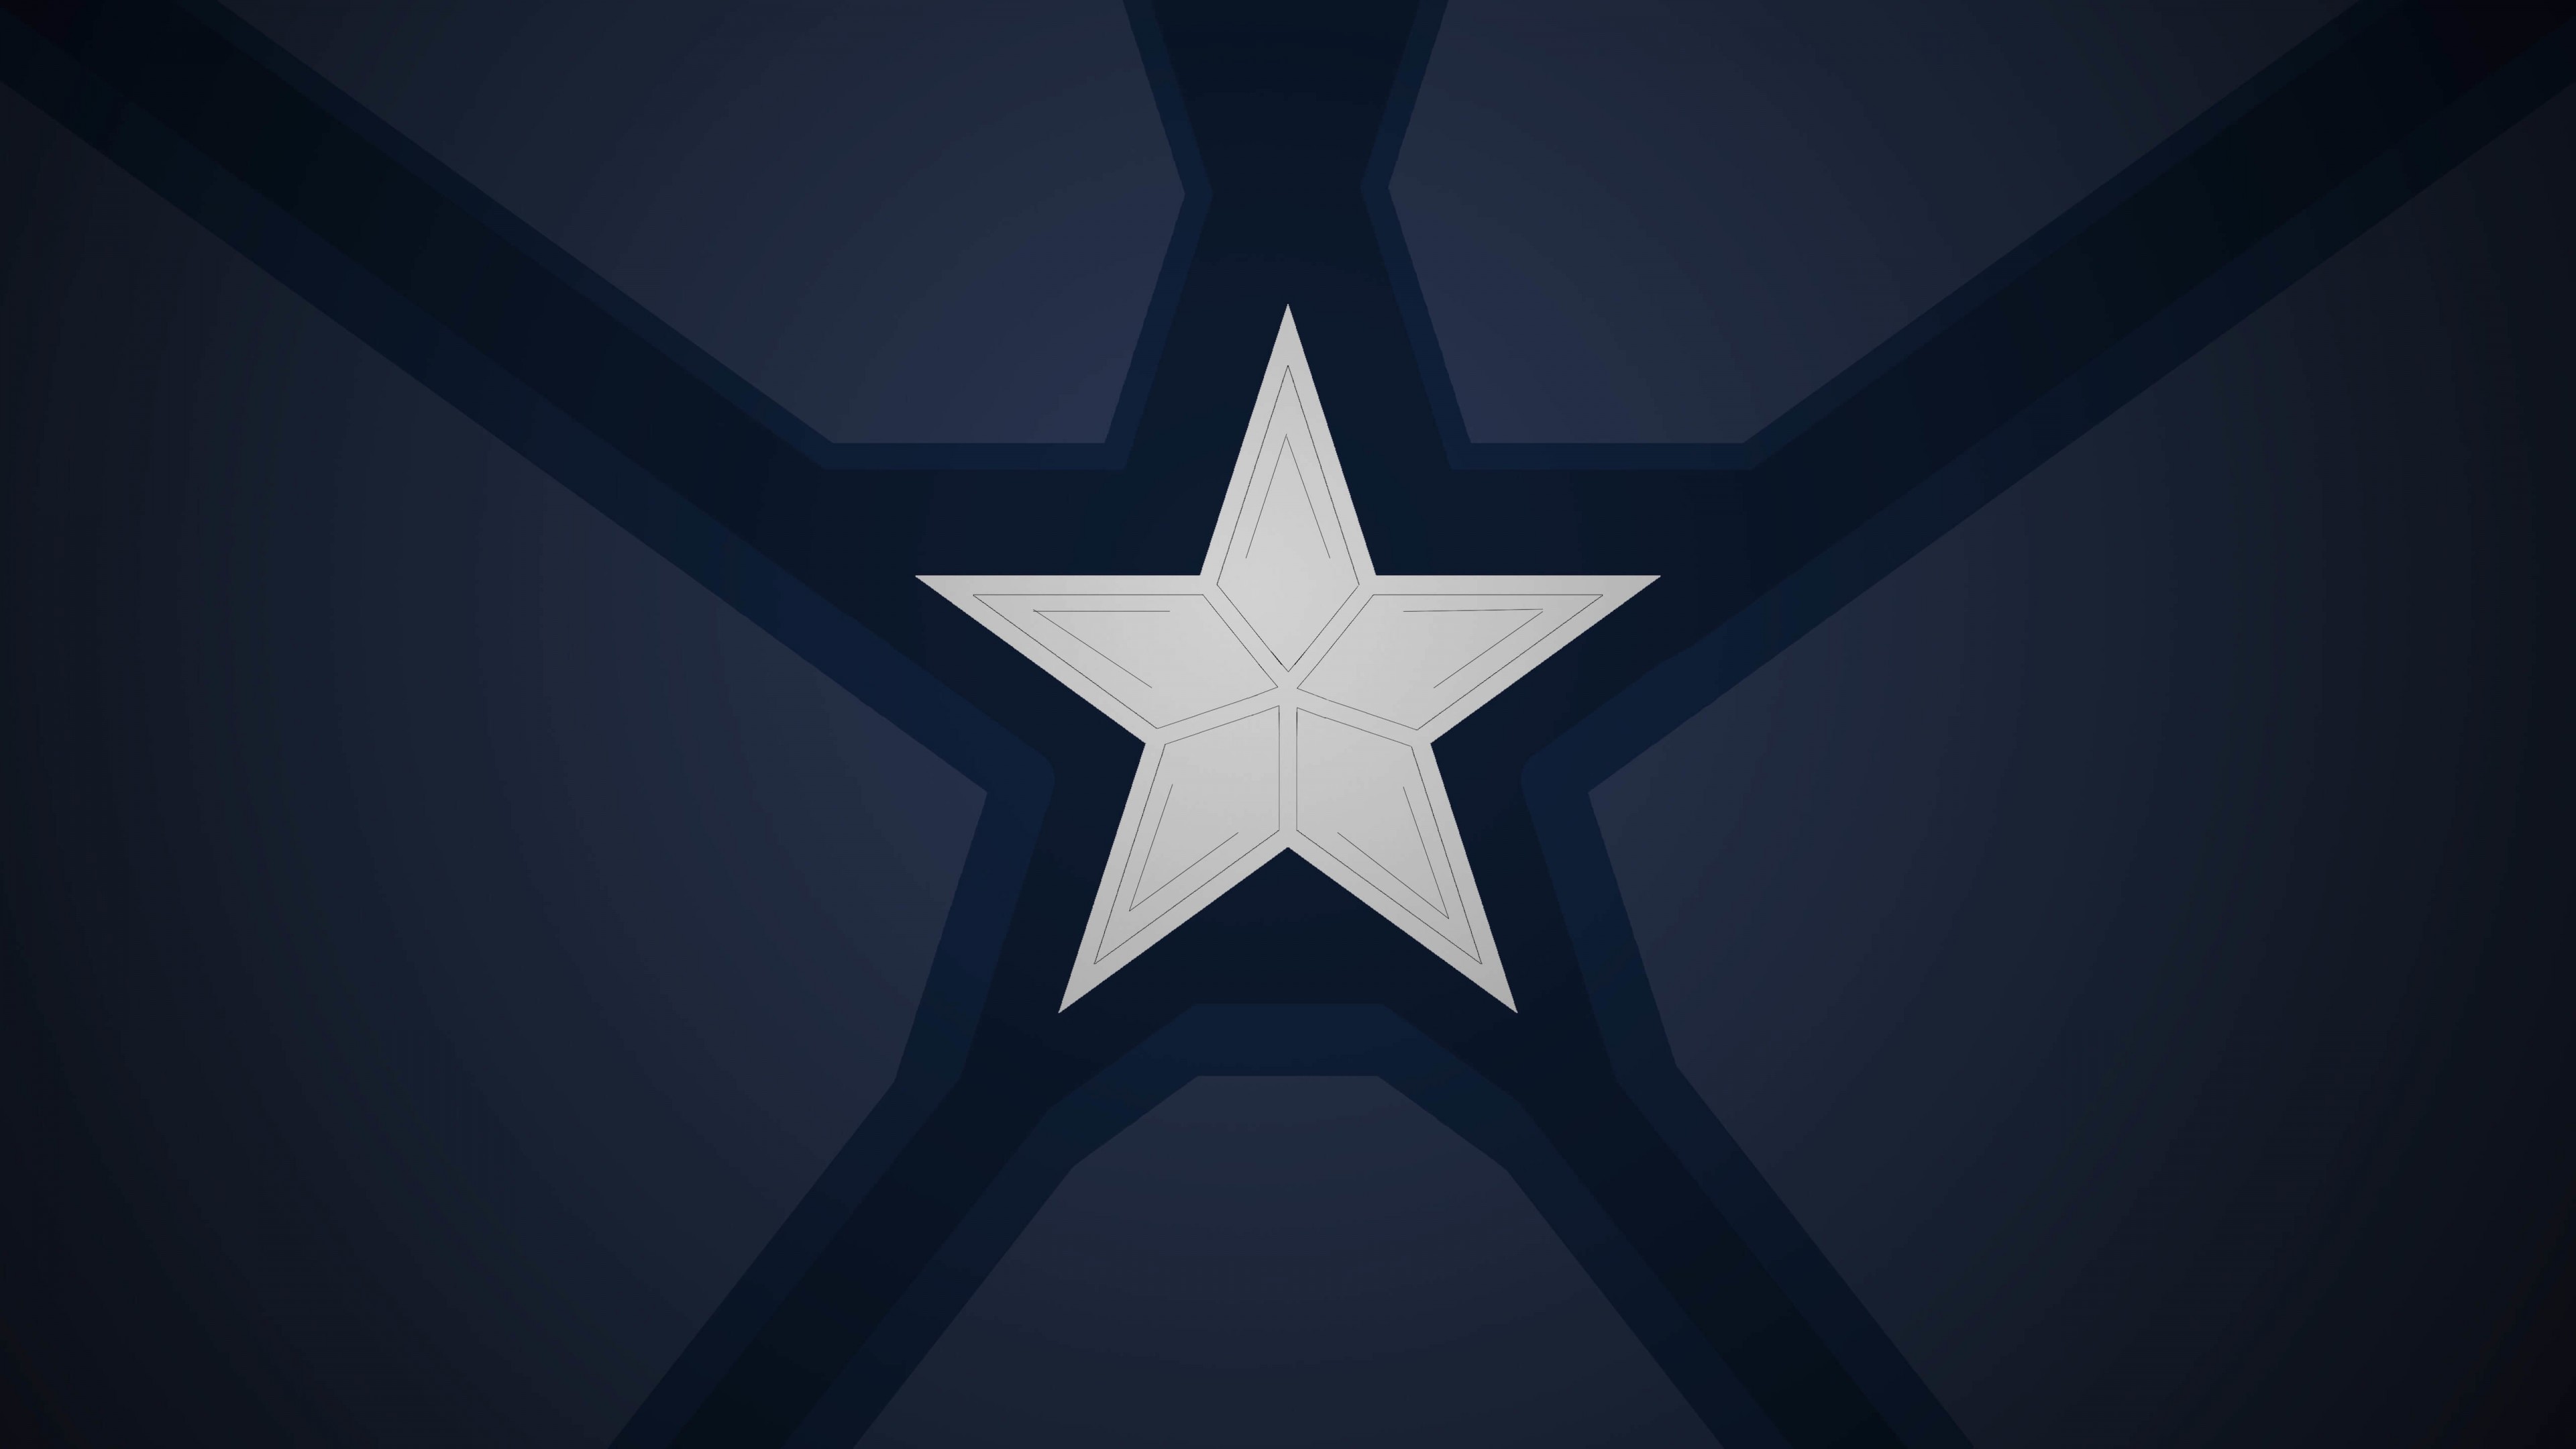 Captain America Emblem Wallpaper for Desktop 4K 3840x2160